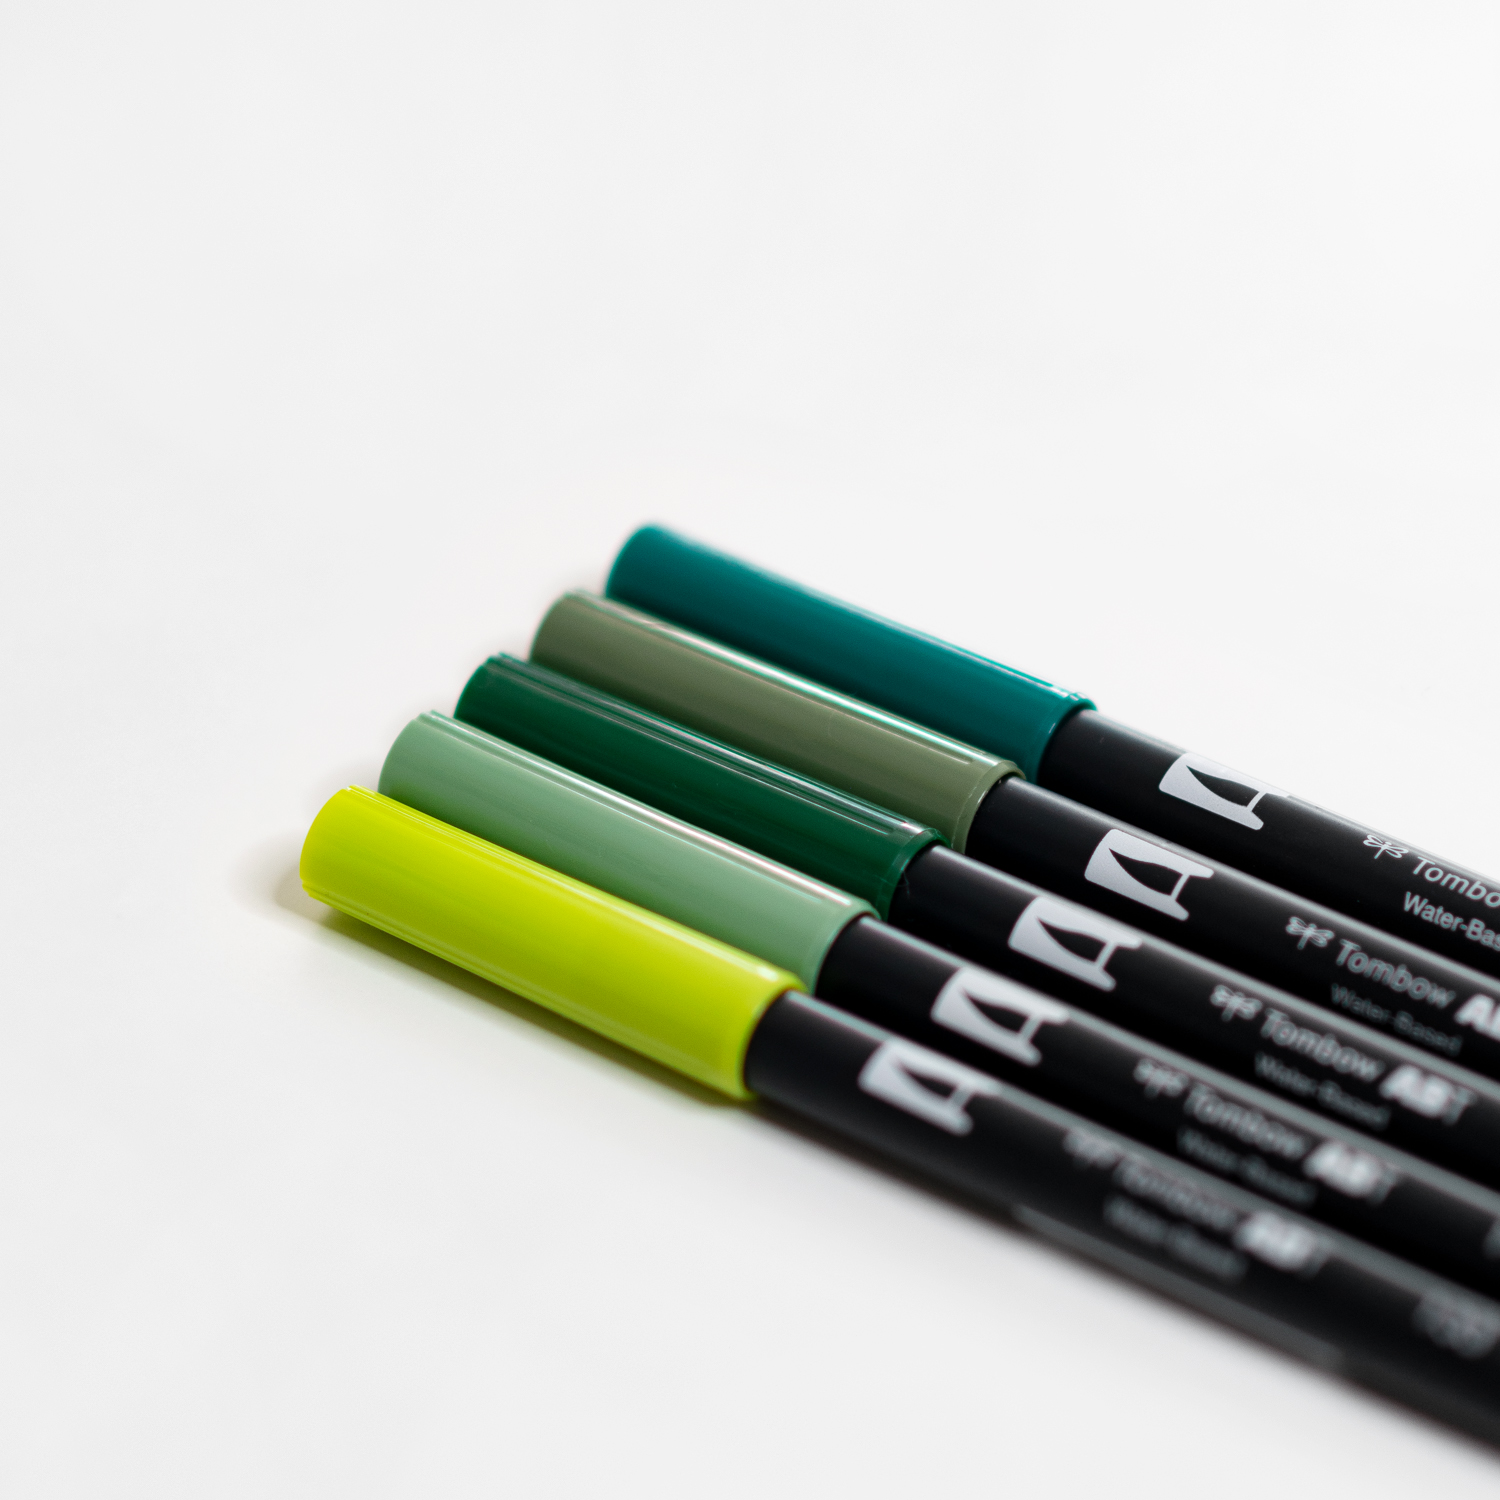 Tombow Brush Pen Set Greenery mit 5 Stiften in Grüntönen